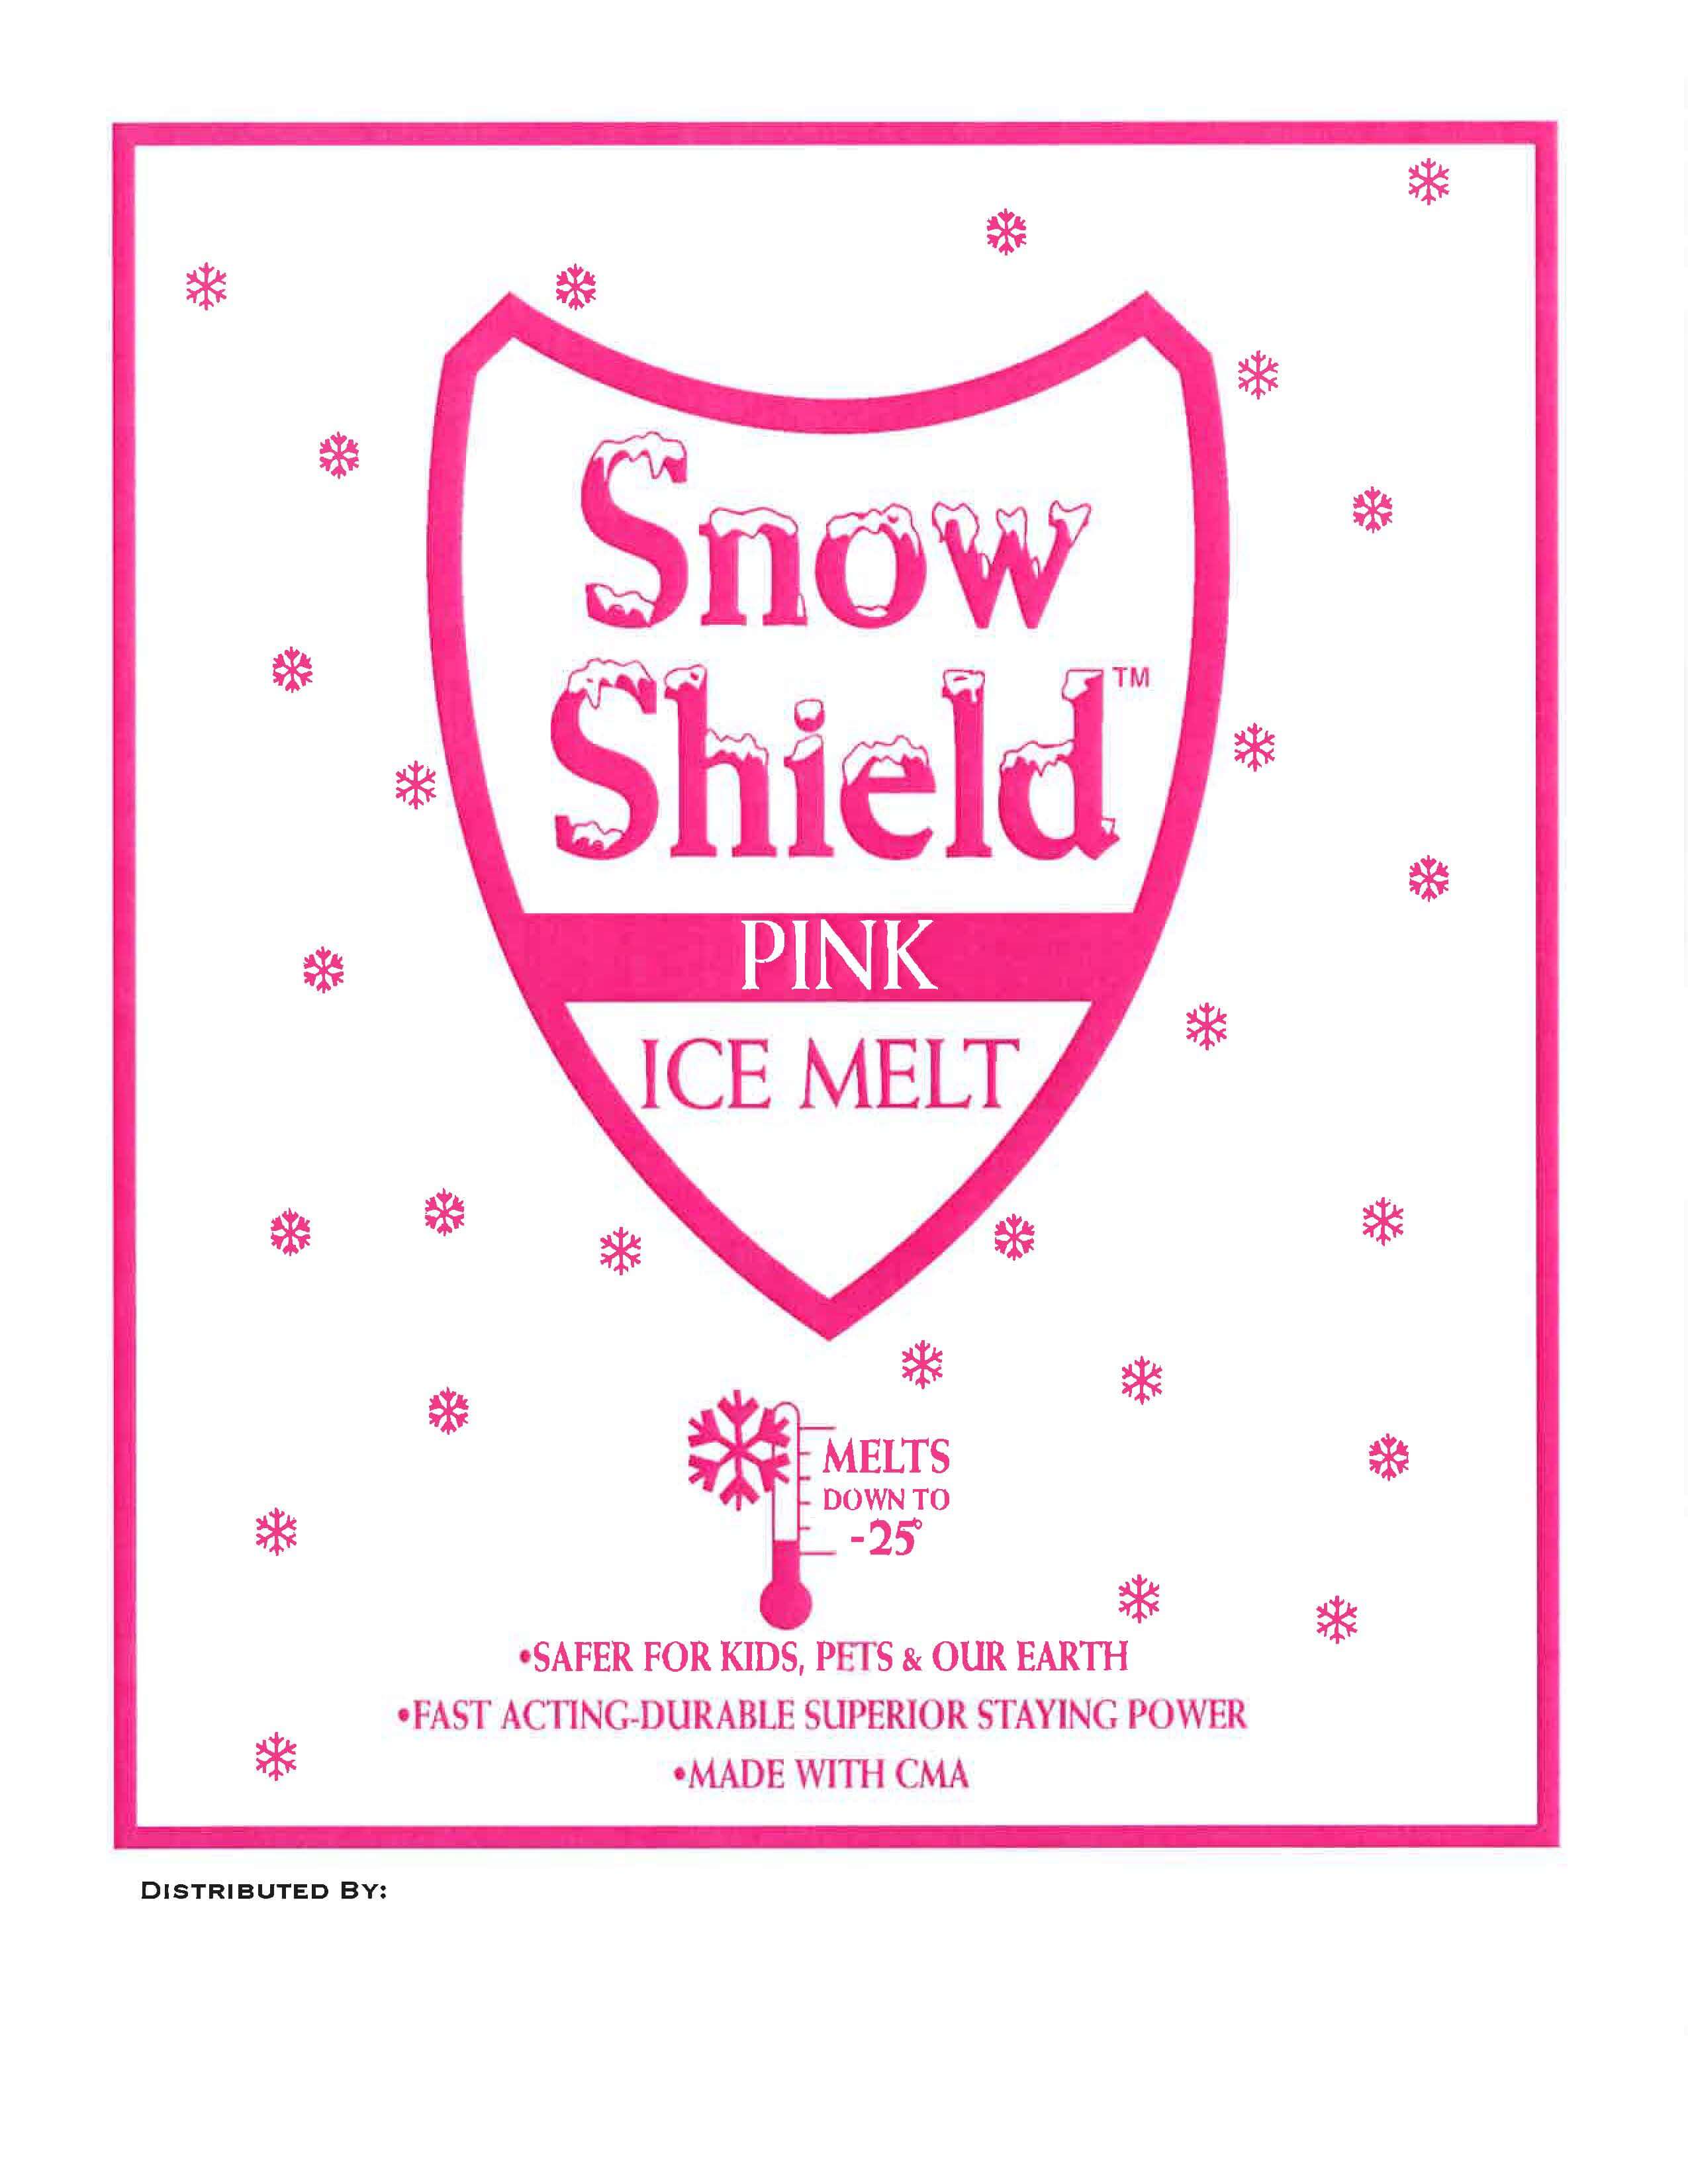 Snow Shield Pink